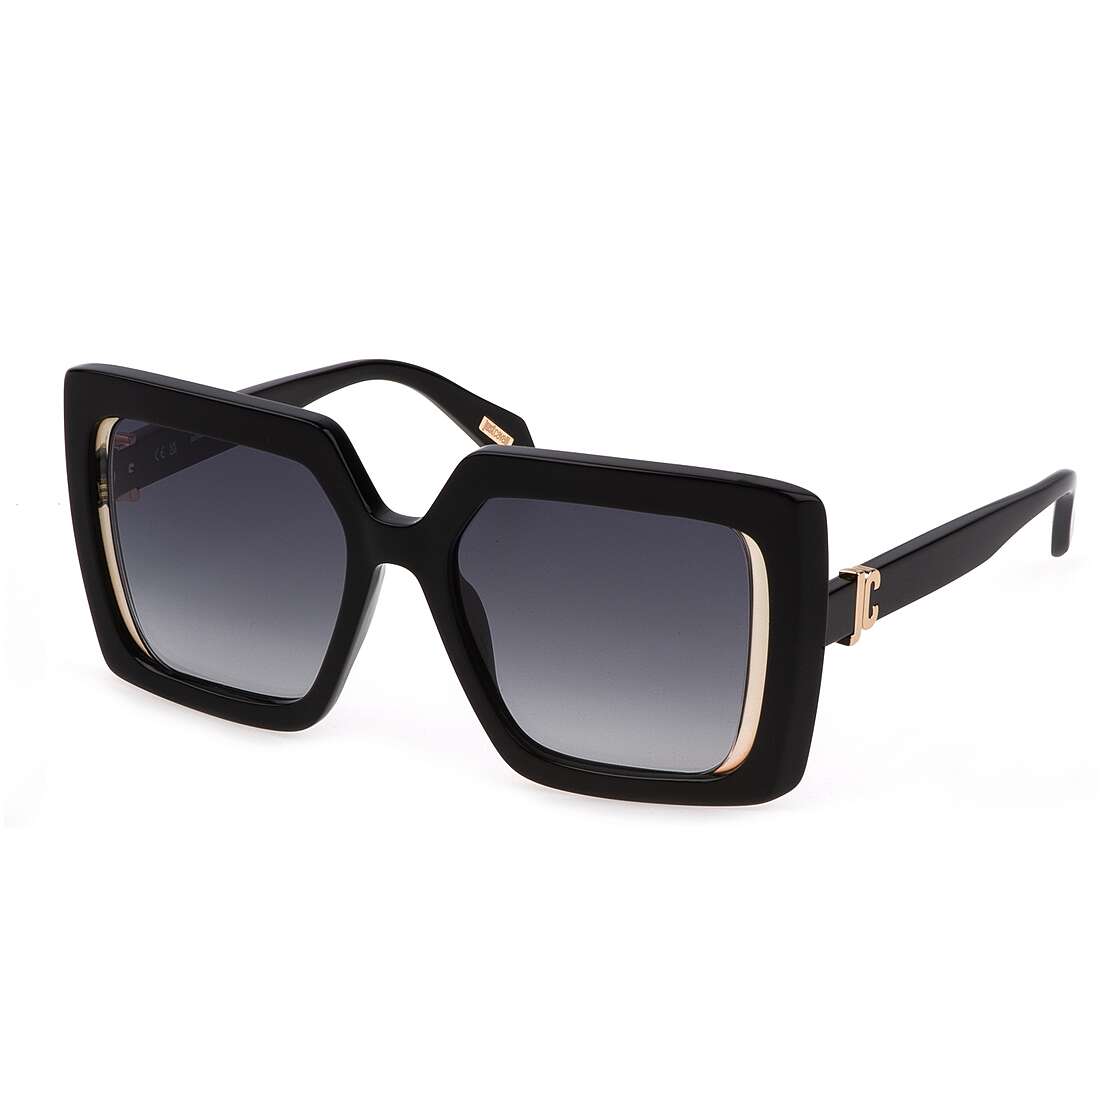 occhiali da sole Just Cavalli neri forma Quadrata SJC0270700